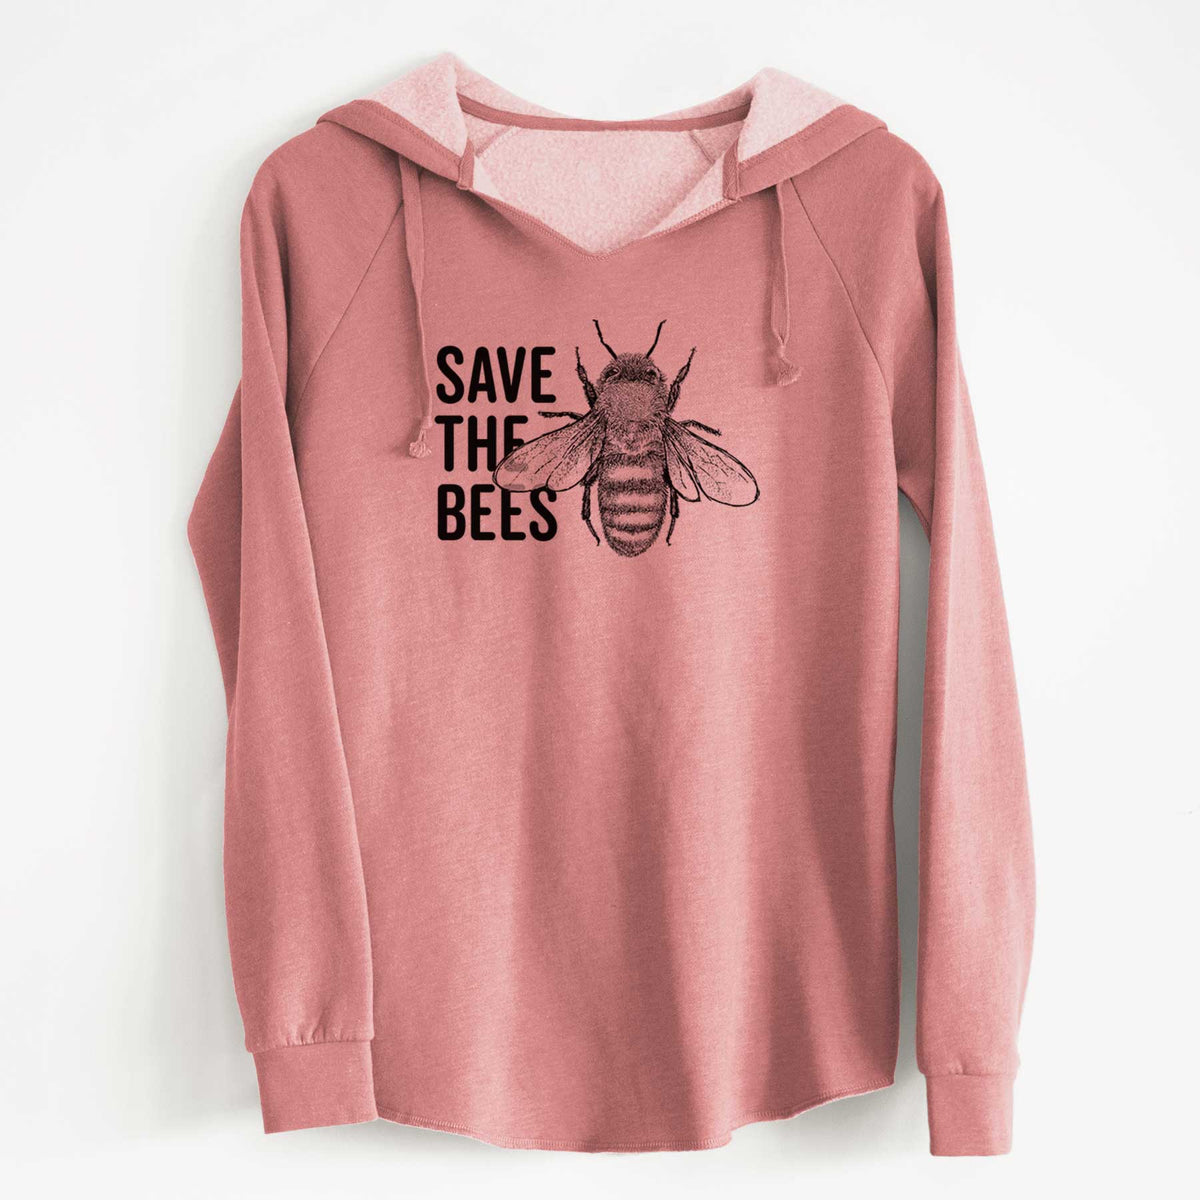 Save the Bees - Cali Wave Hooded Sweatshirt